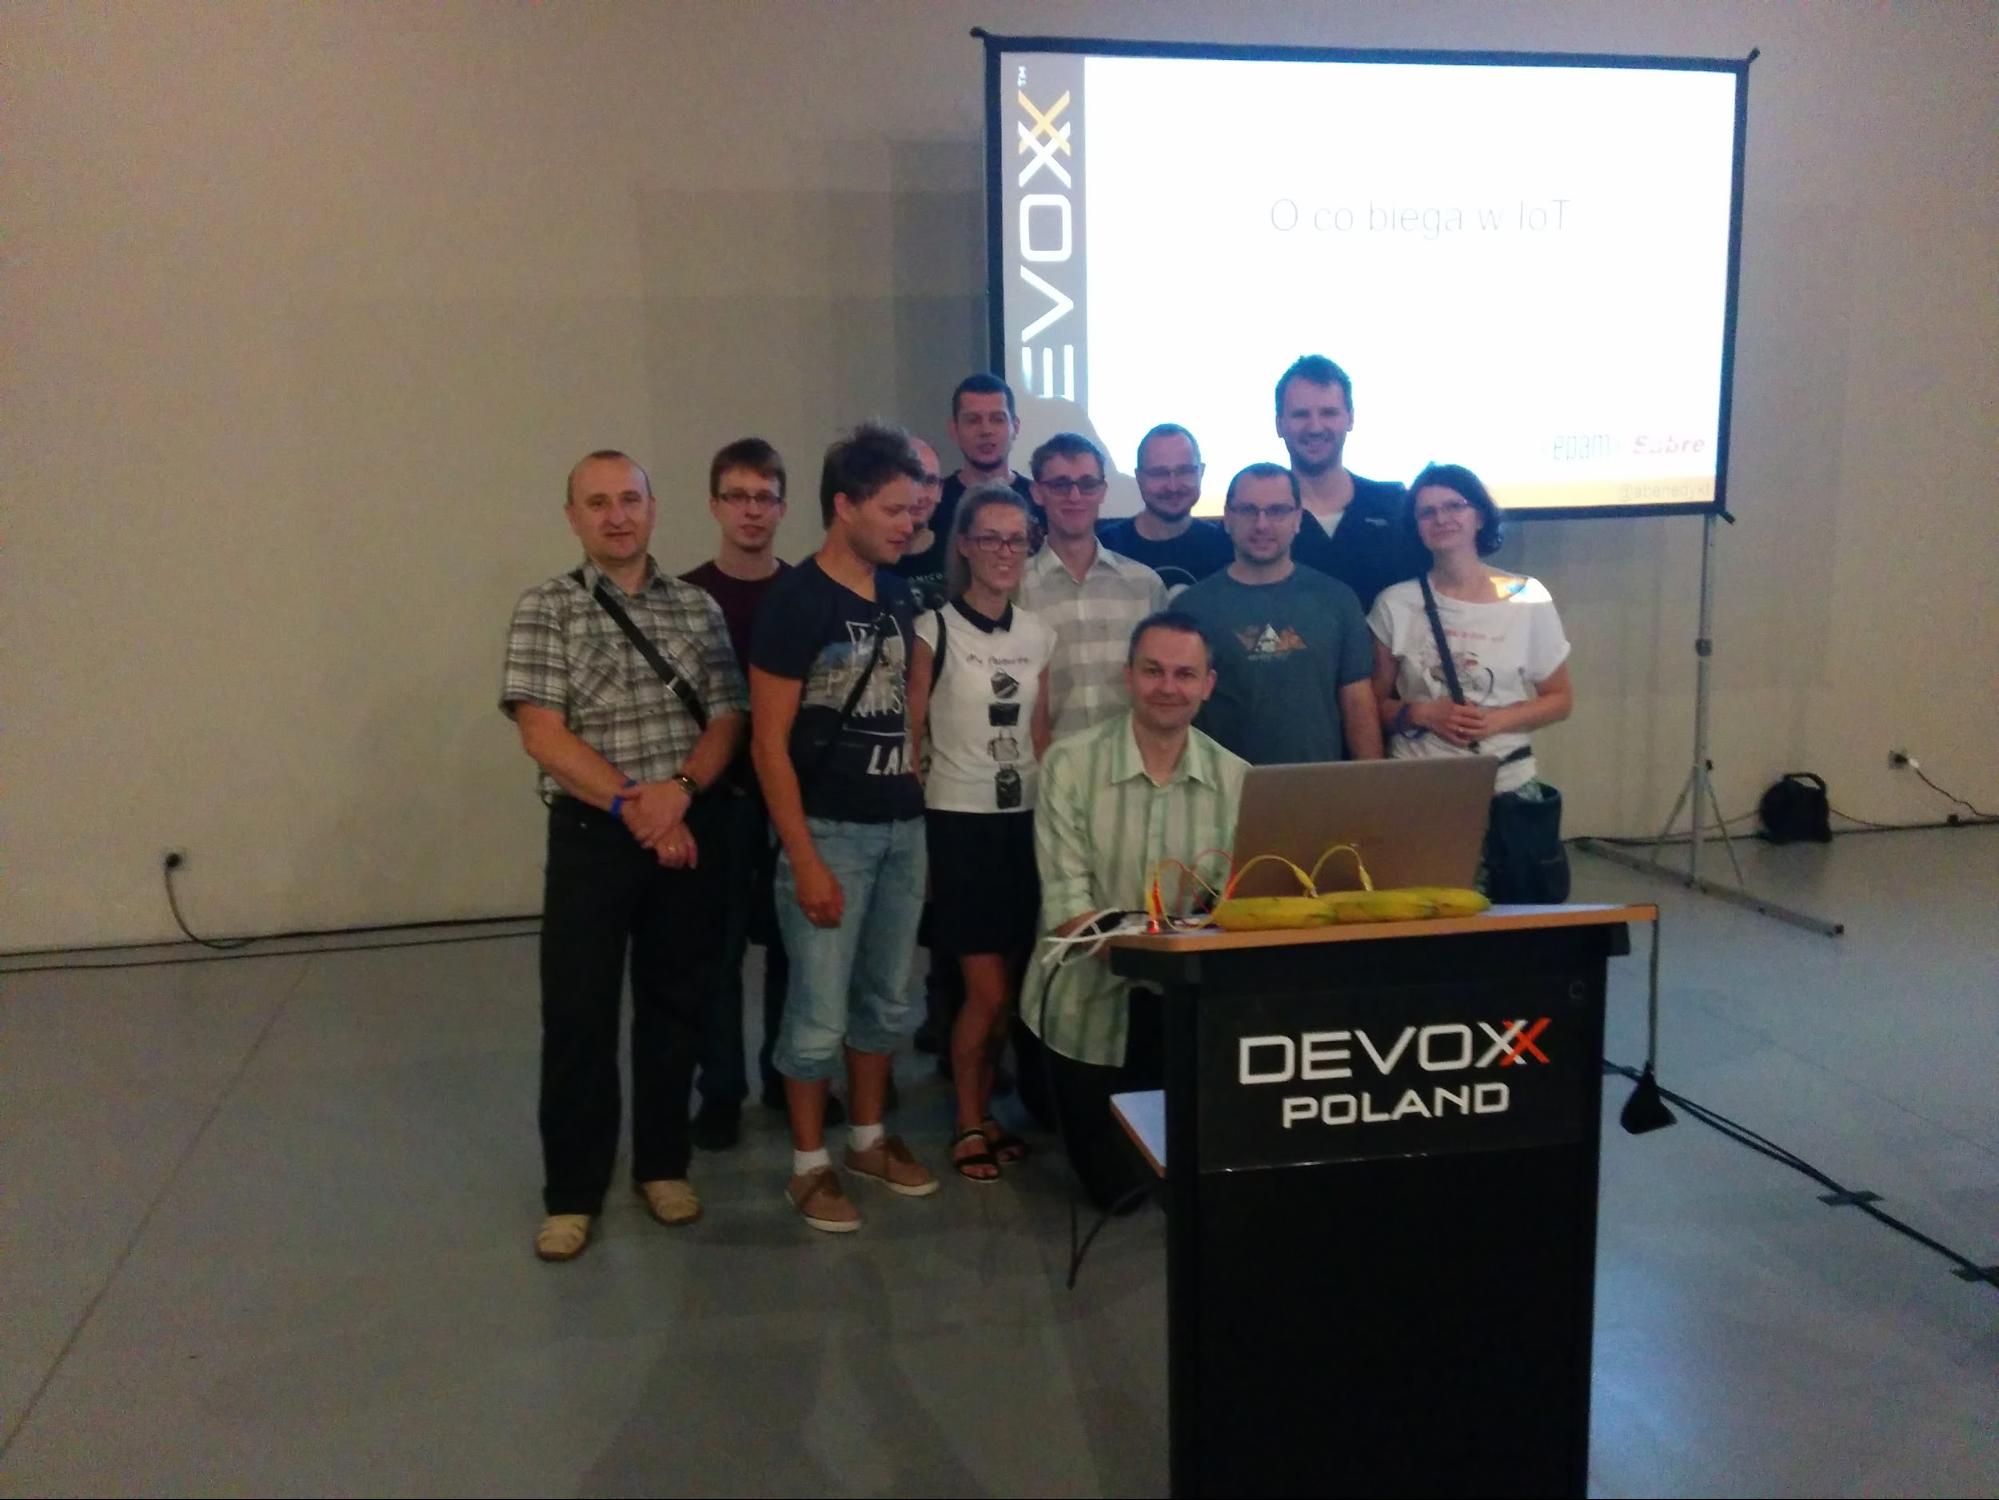 Me and my work mates at Devoxx Poland, after Arek’s speech